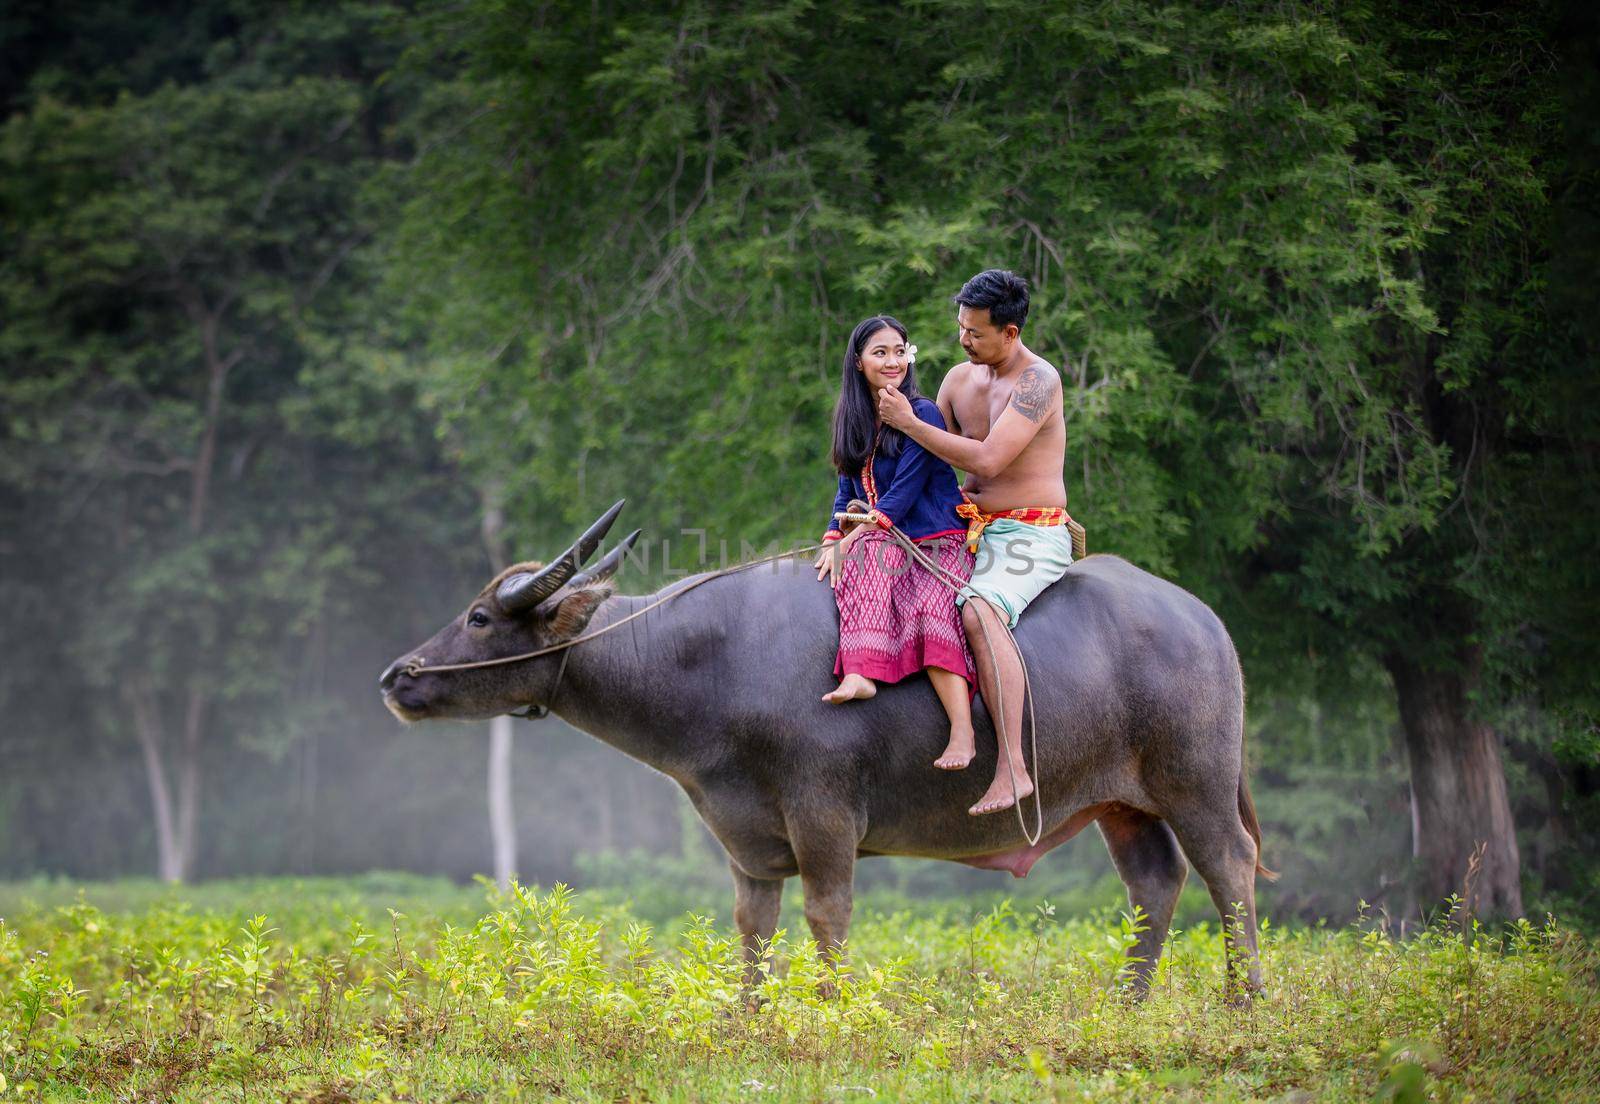 Men and women riding buffalo in rural fields